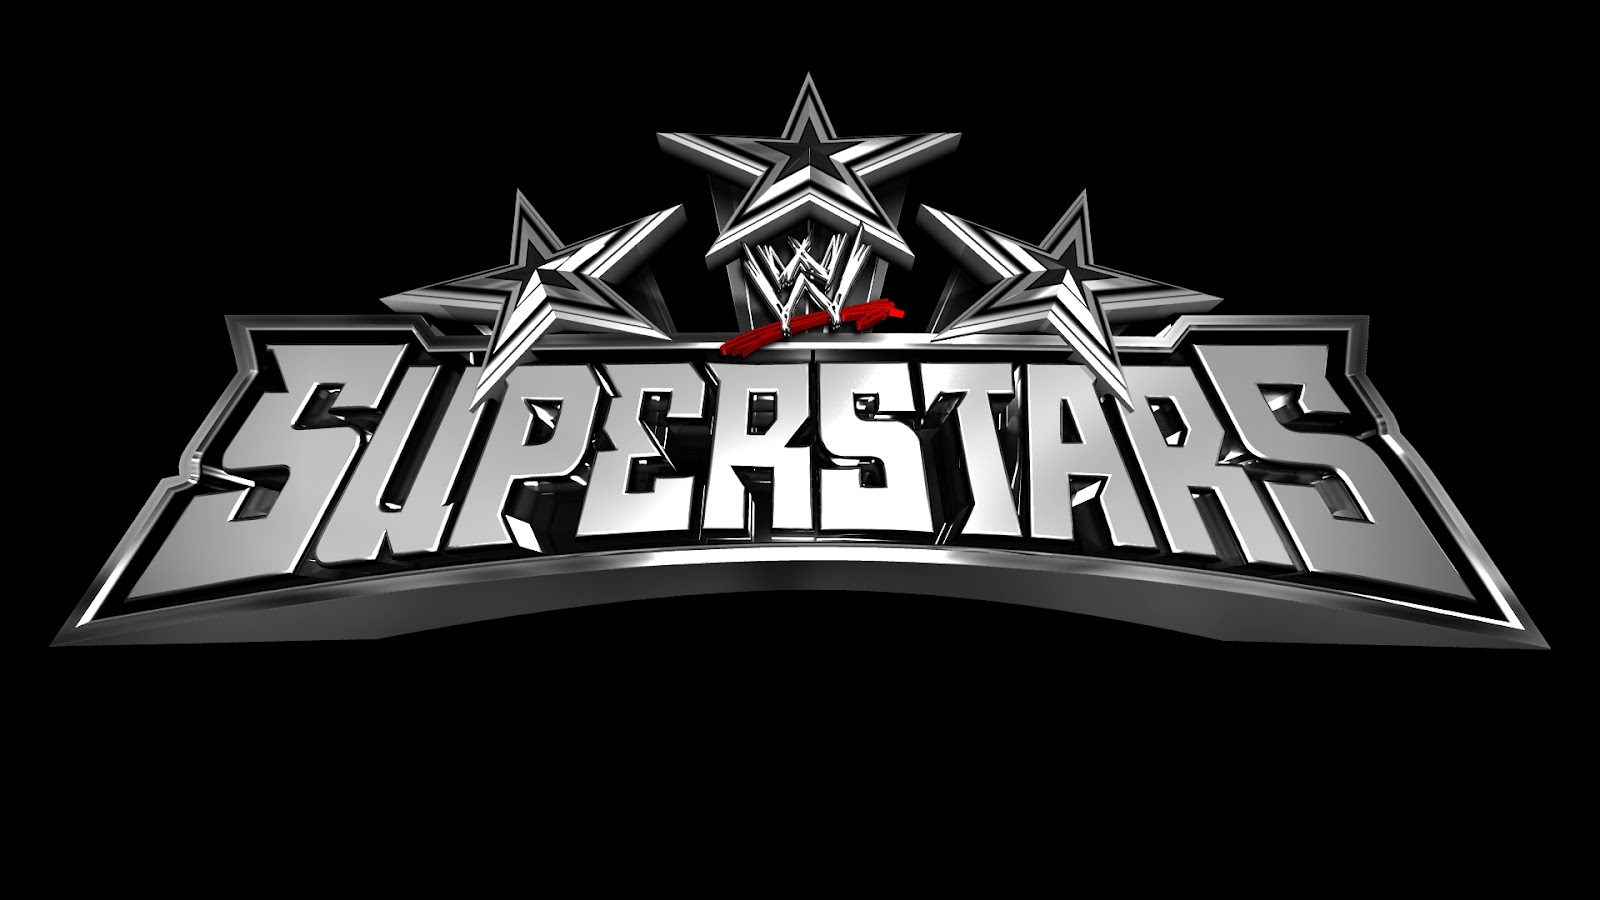 WWE WALLPAPERS wwe logo wallpaper wwe logo images wwe